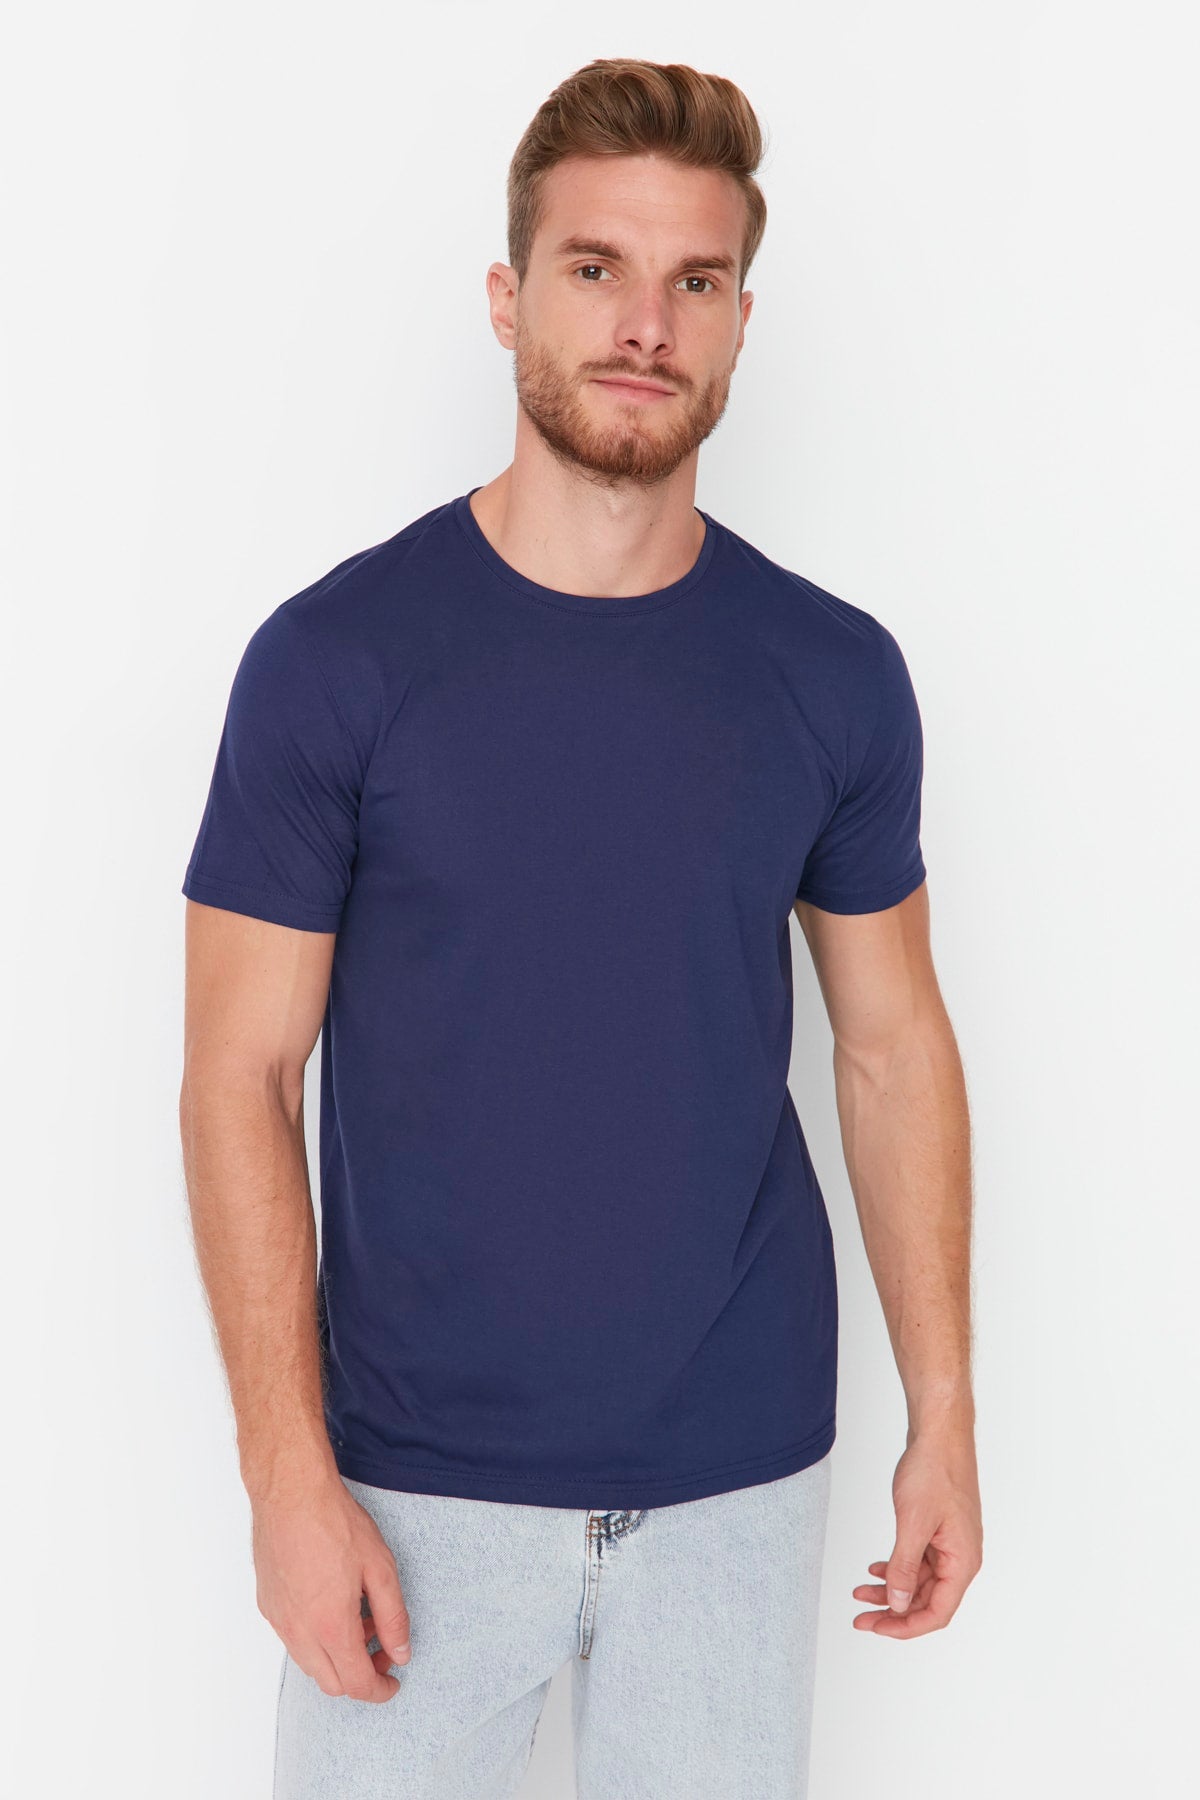 Navy Blue Men's Basic Regular/Normal Fit Crew Neck Short Sleeved T-Shirt